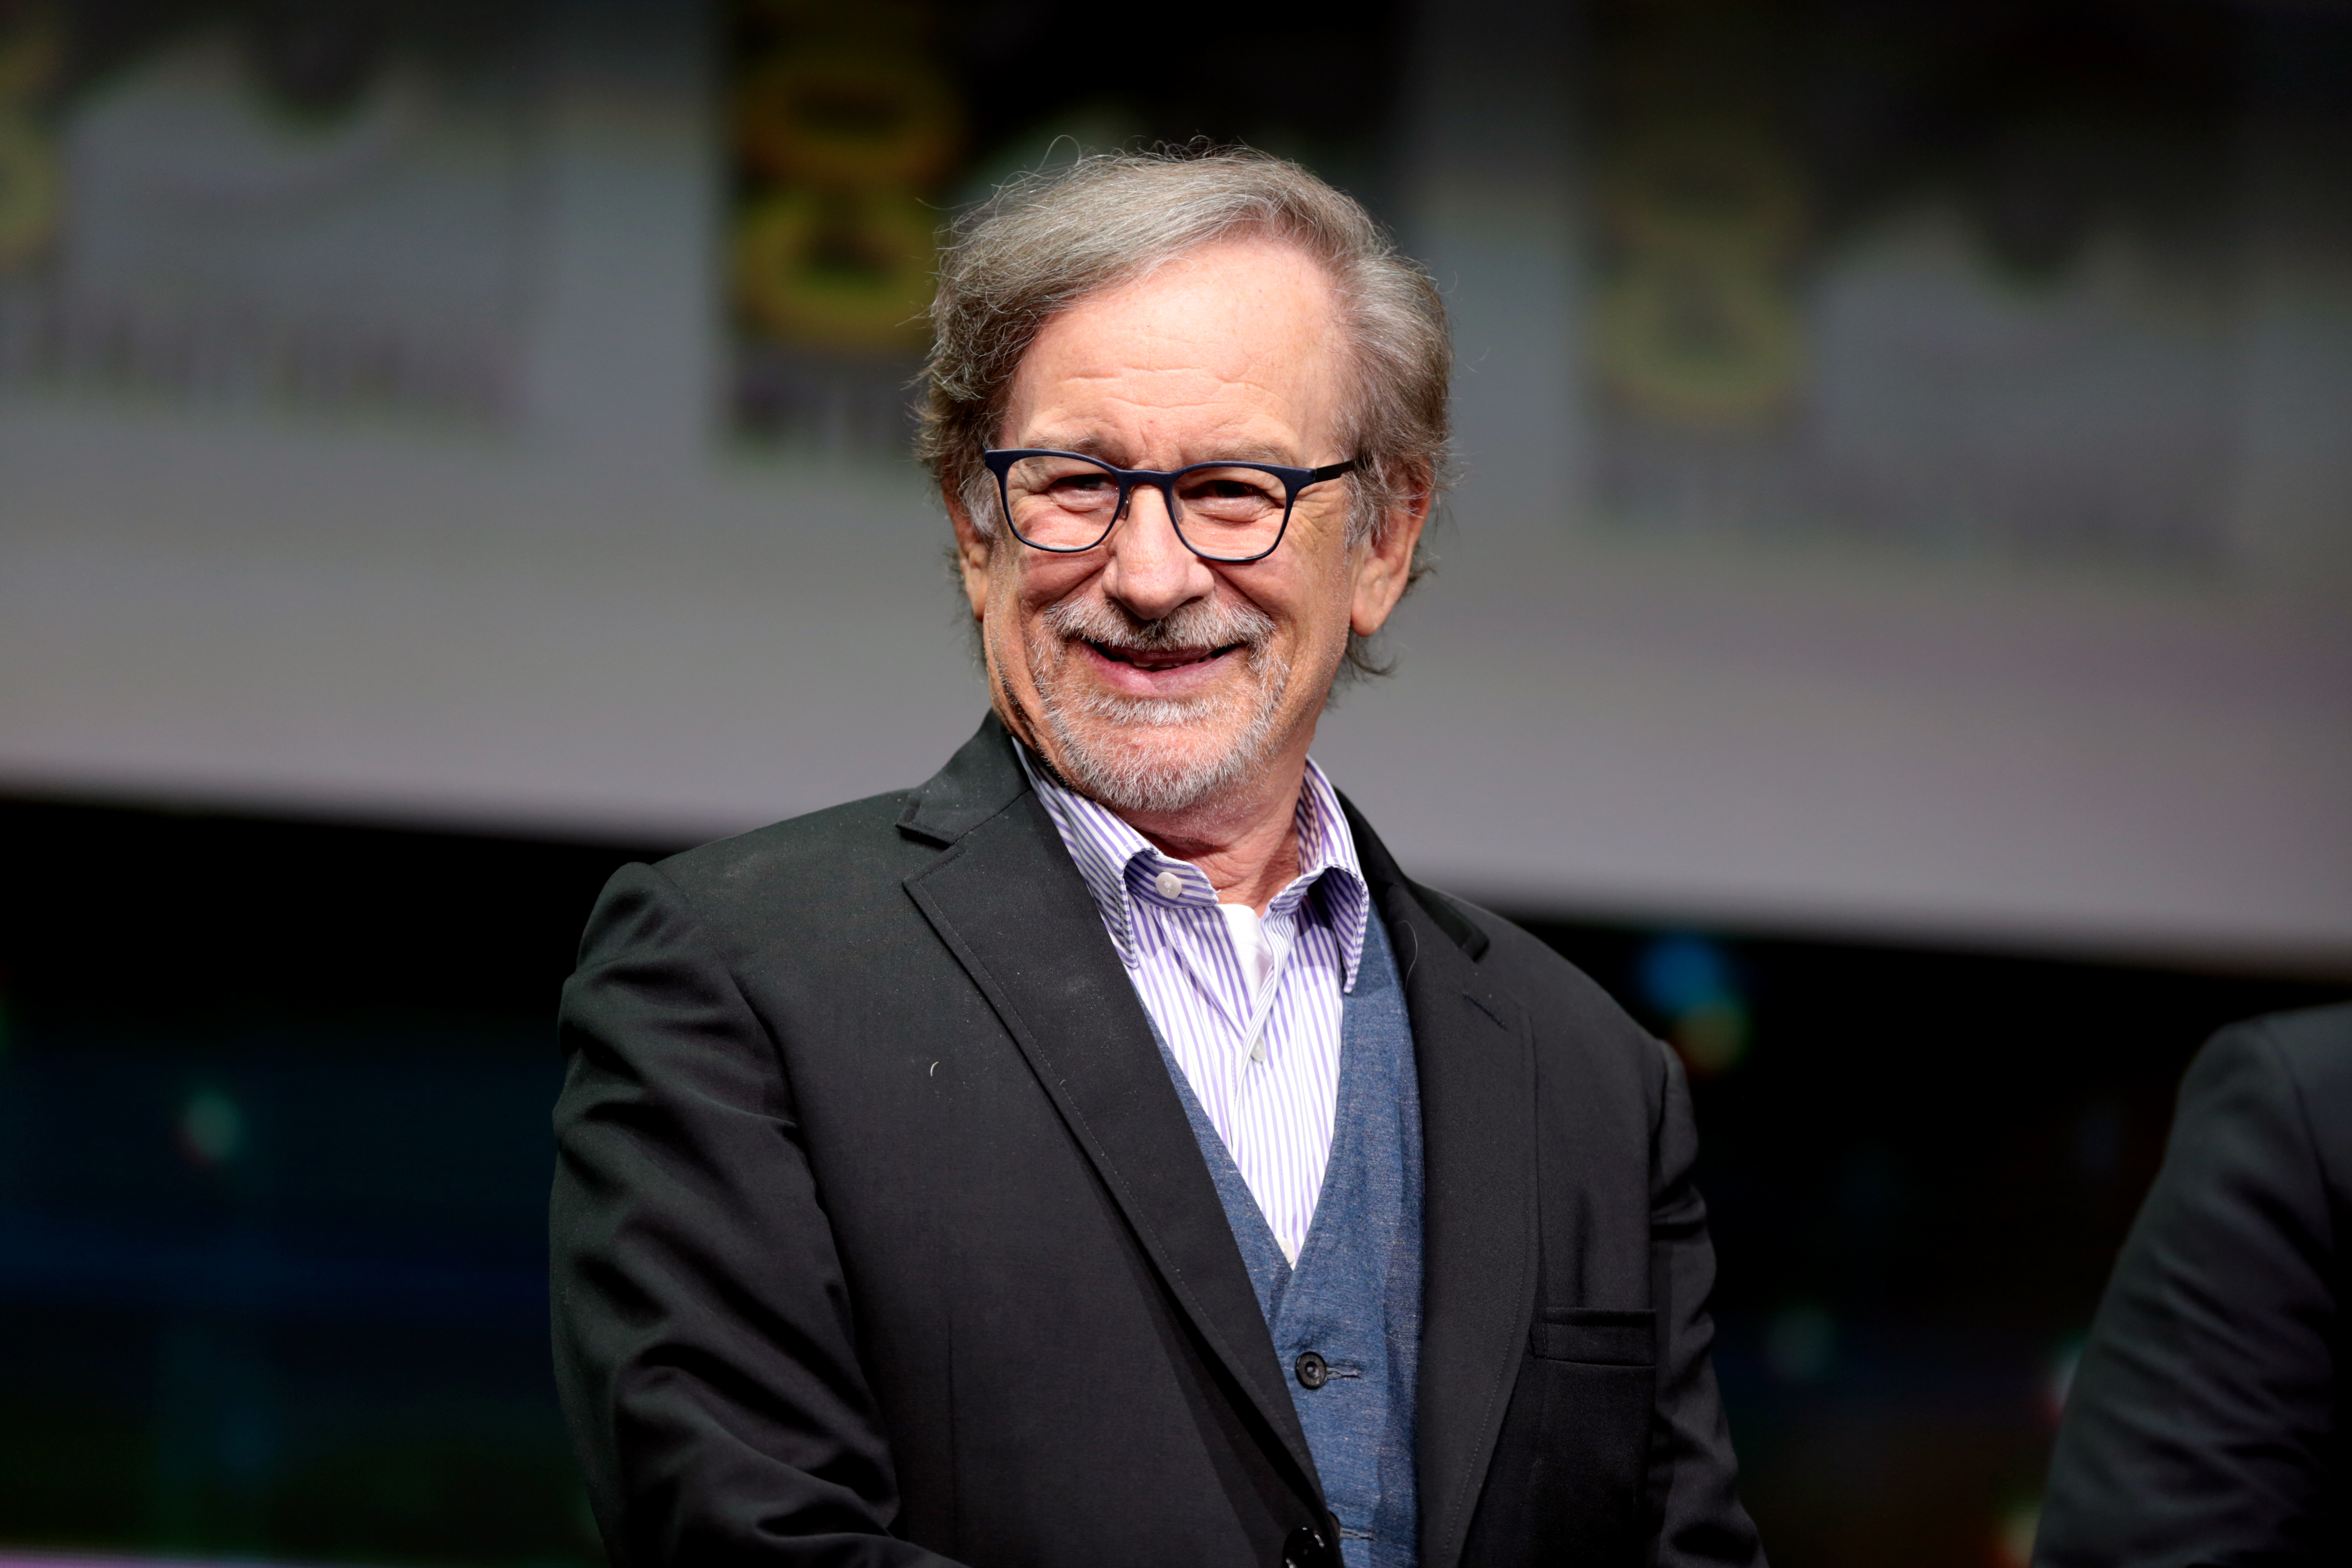 Steven Spielberg photo #111302, Steven Spielberg image